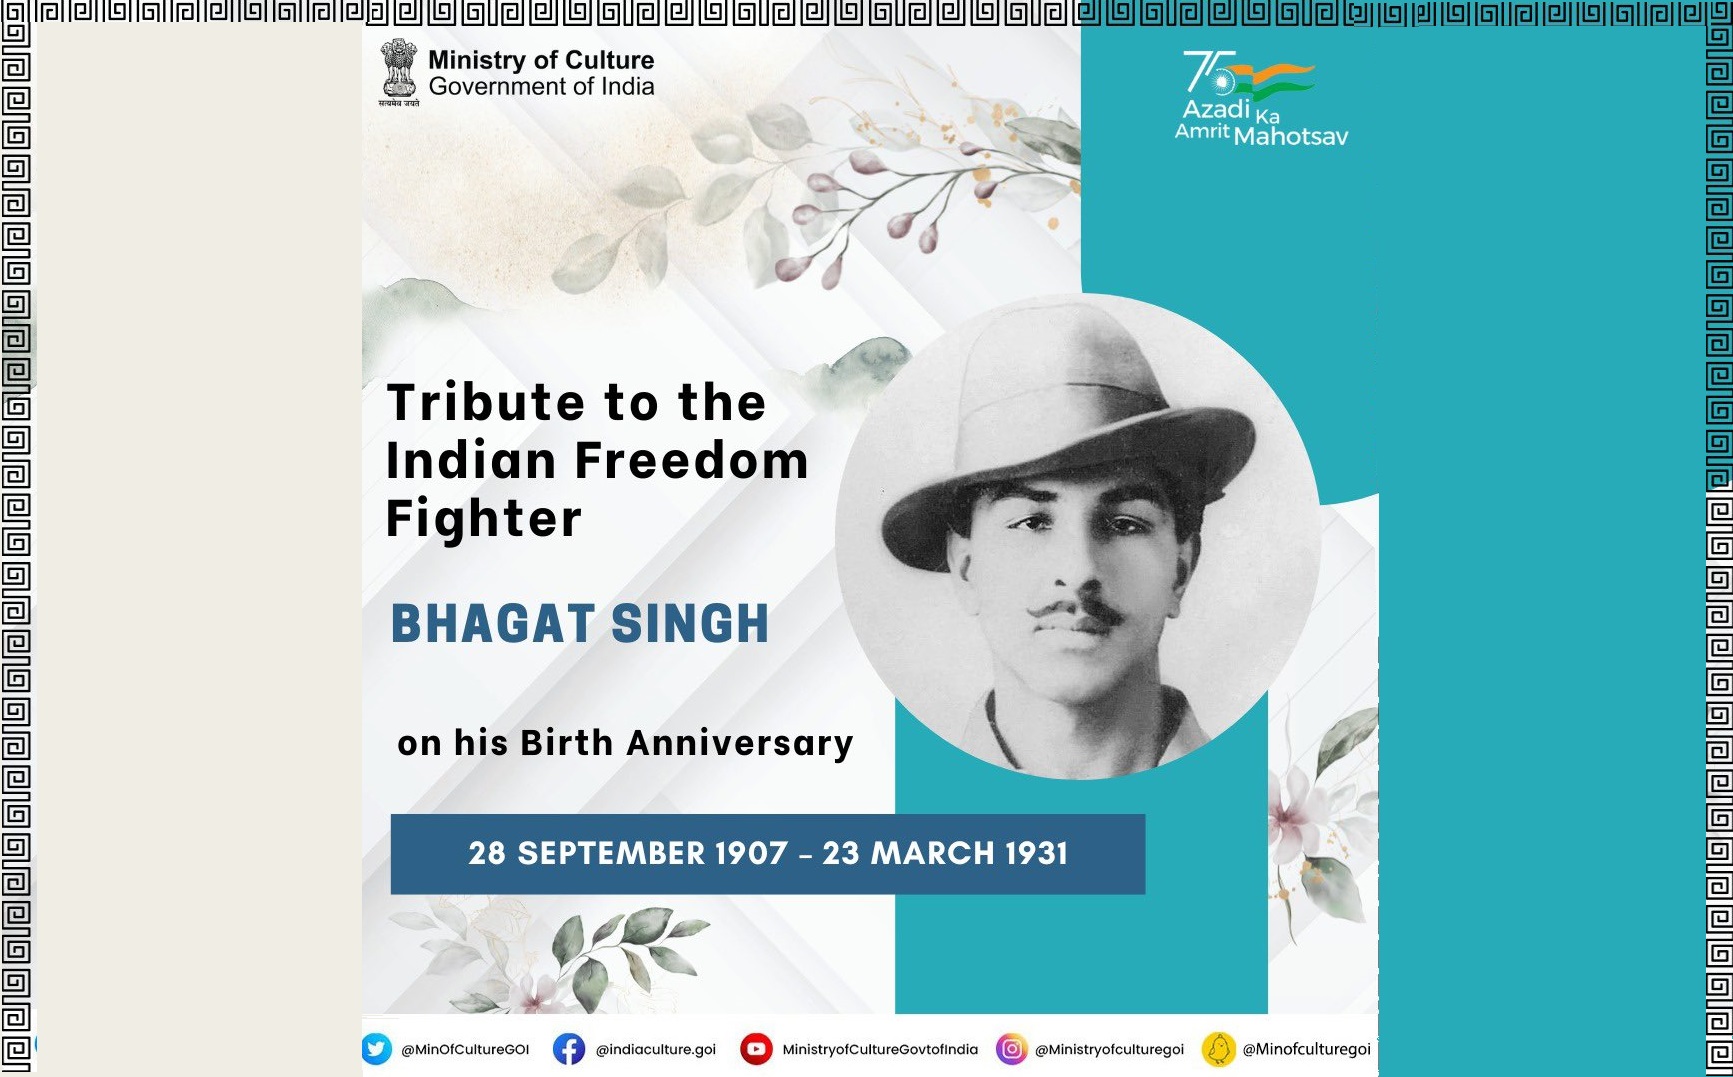 Birth Anniversary of Bhagat Singh